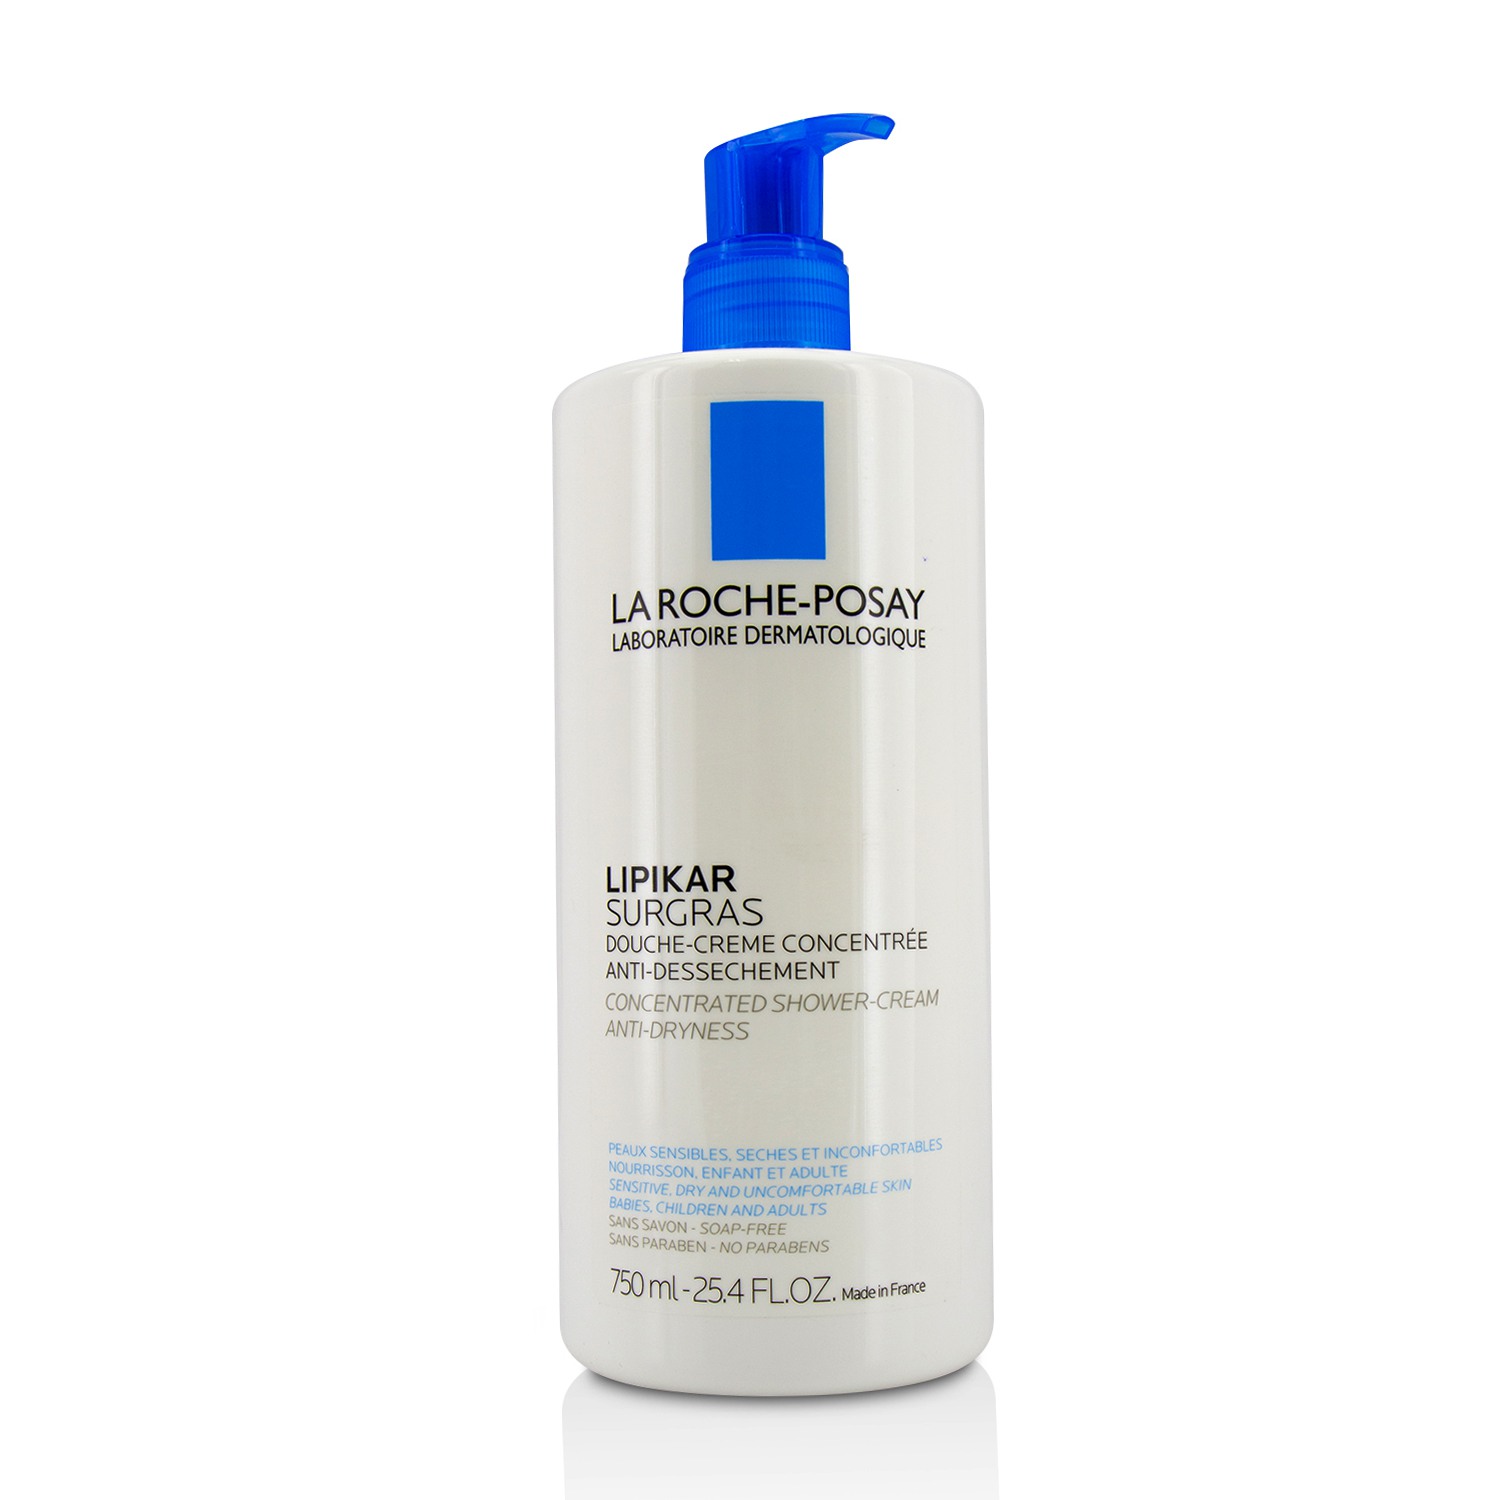 Lipikar Surgras Concentrated Shower-Cream La Roche Posay Image